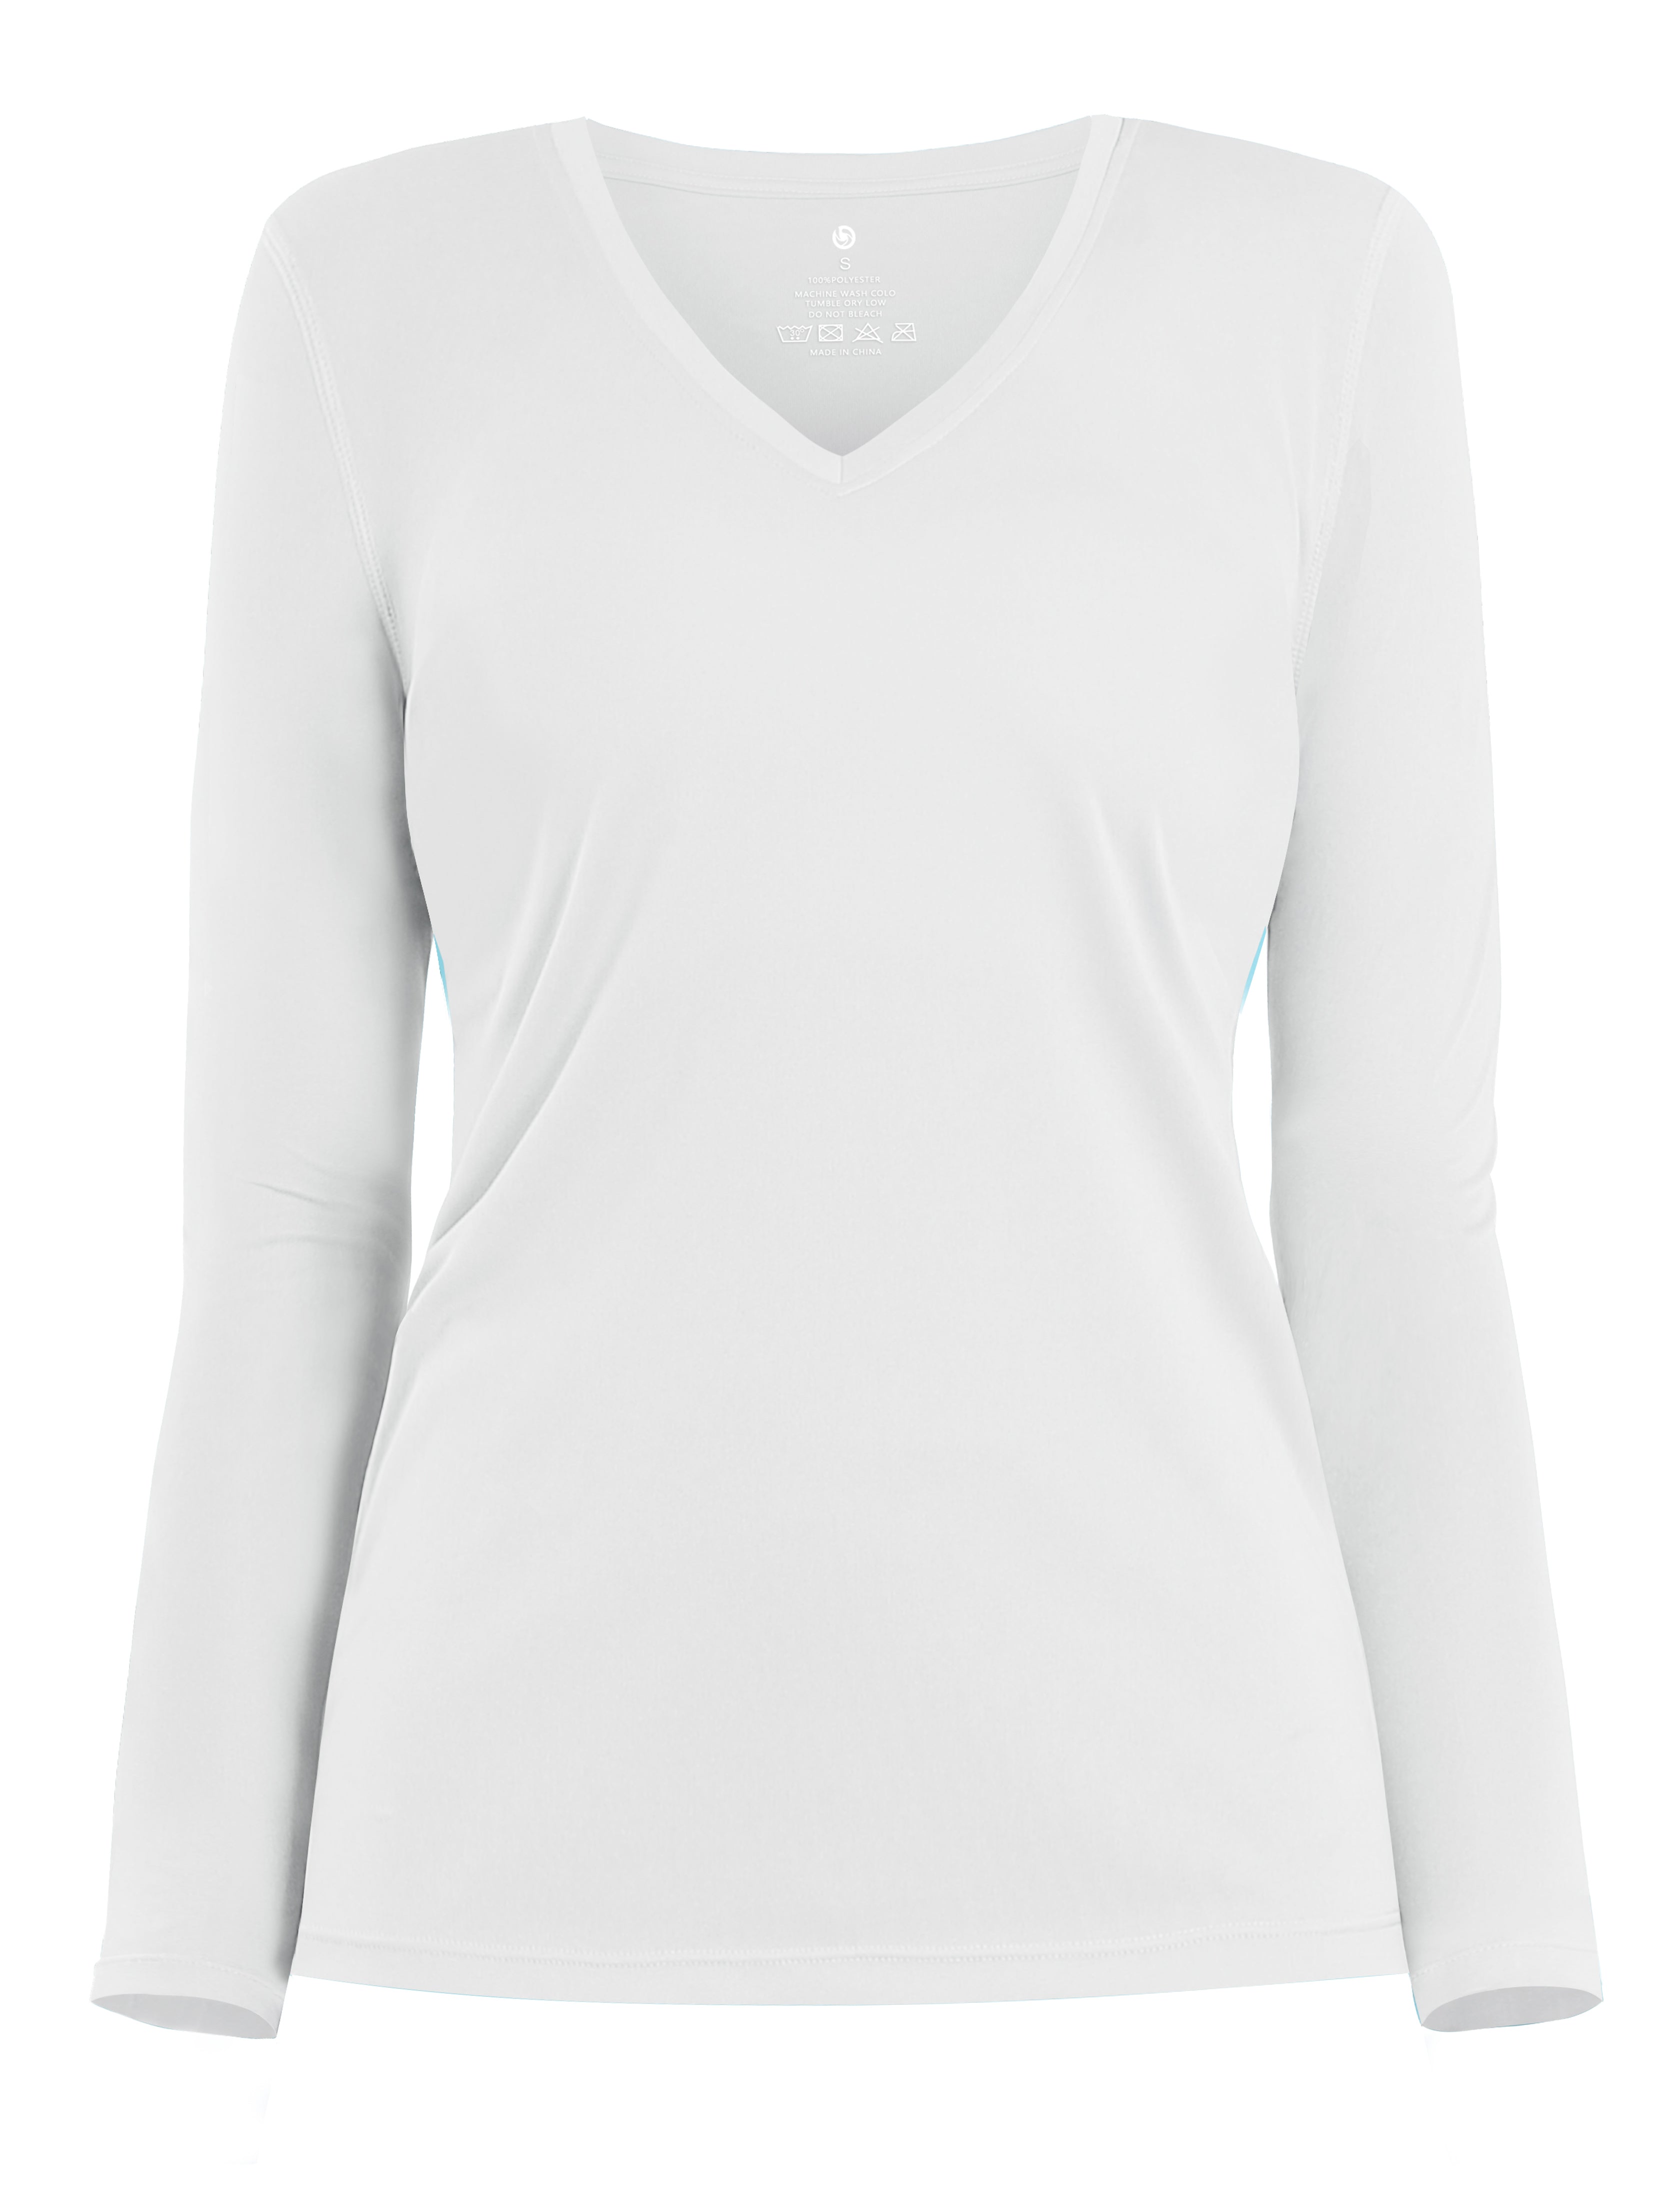 V Neck Long Sleeve Athletic Shirts white_Golf